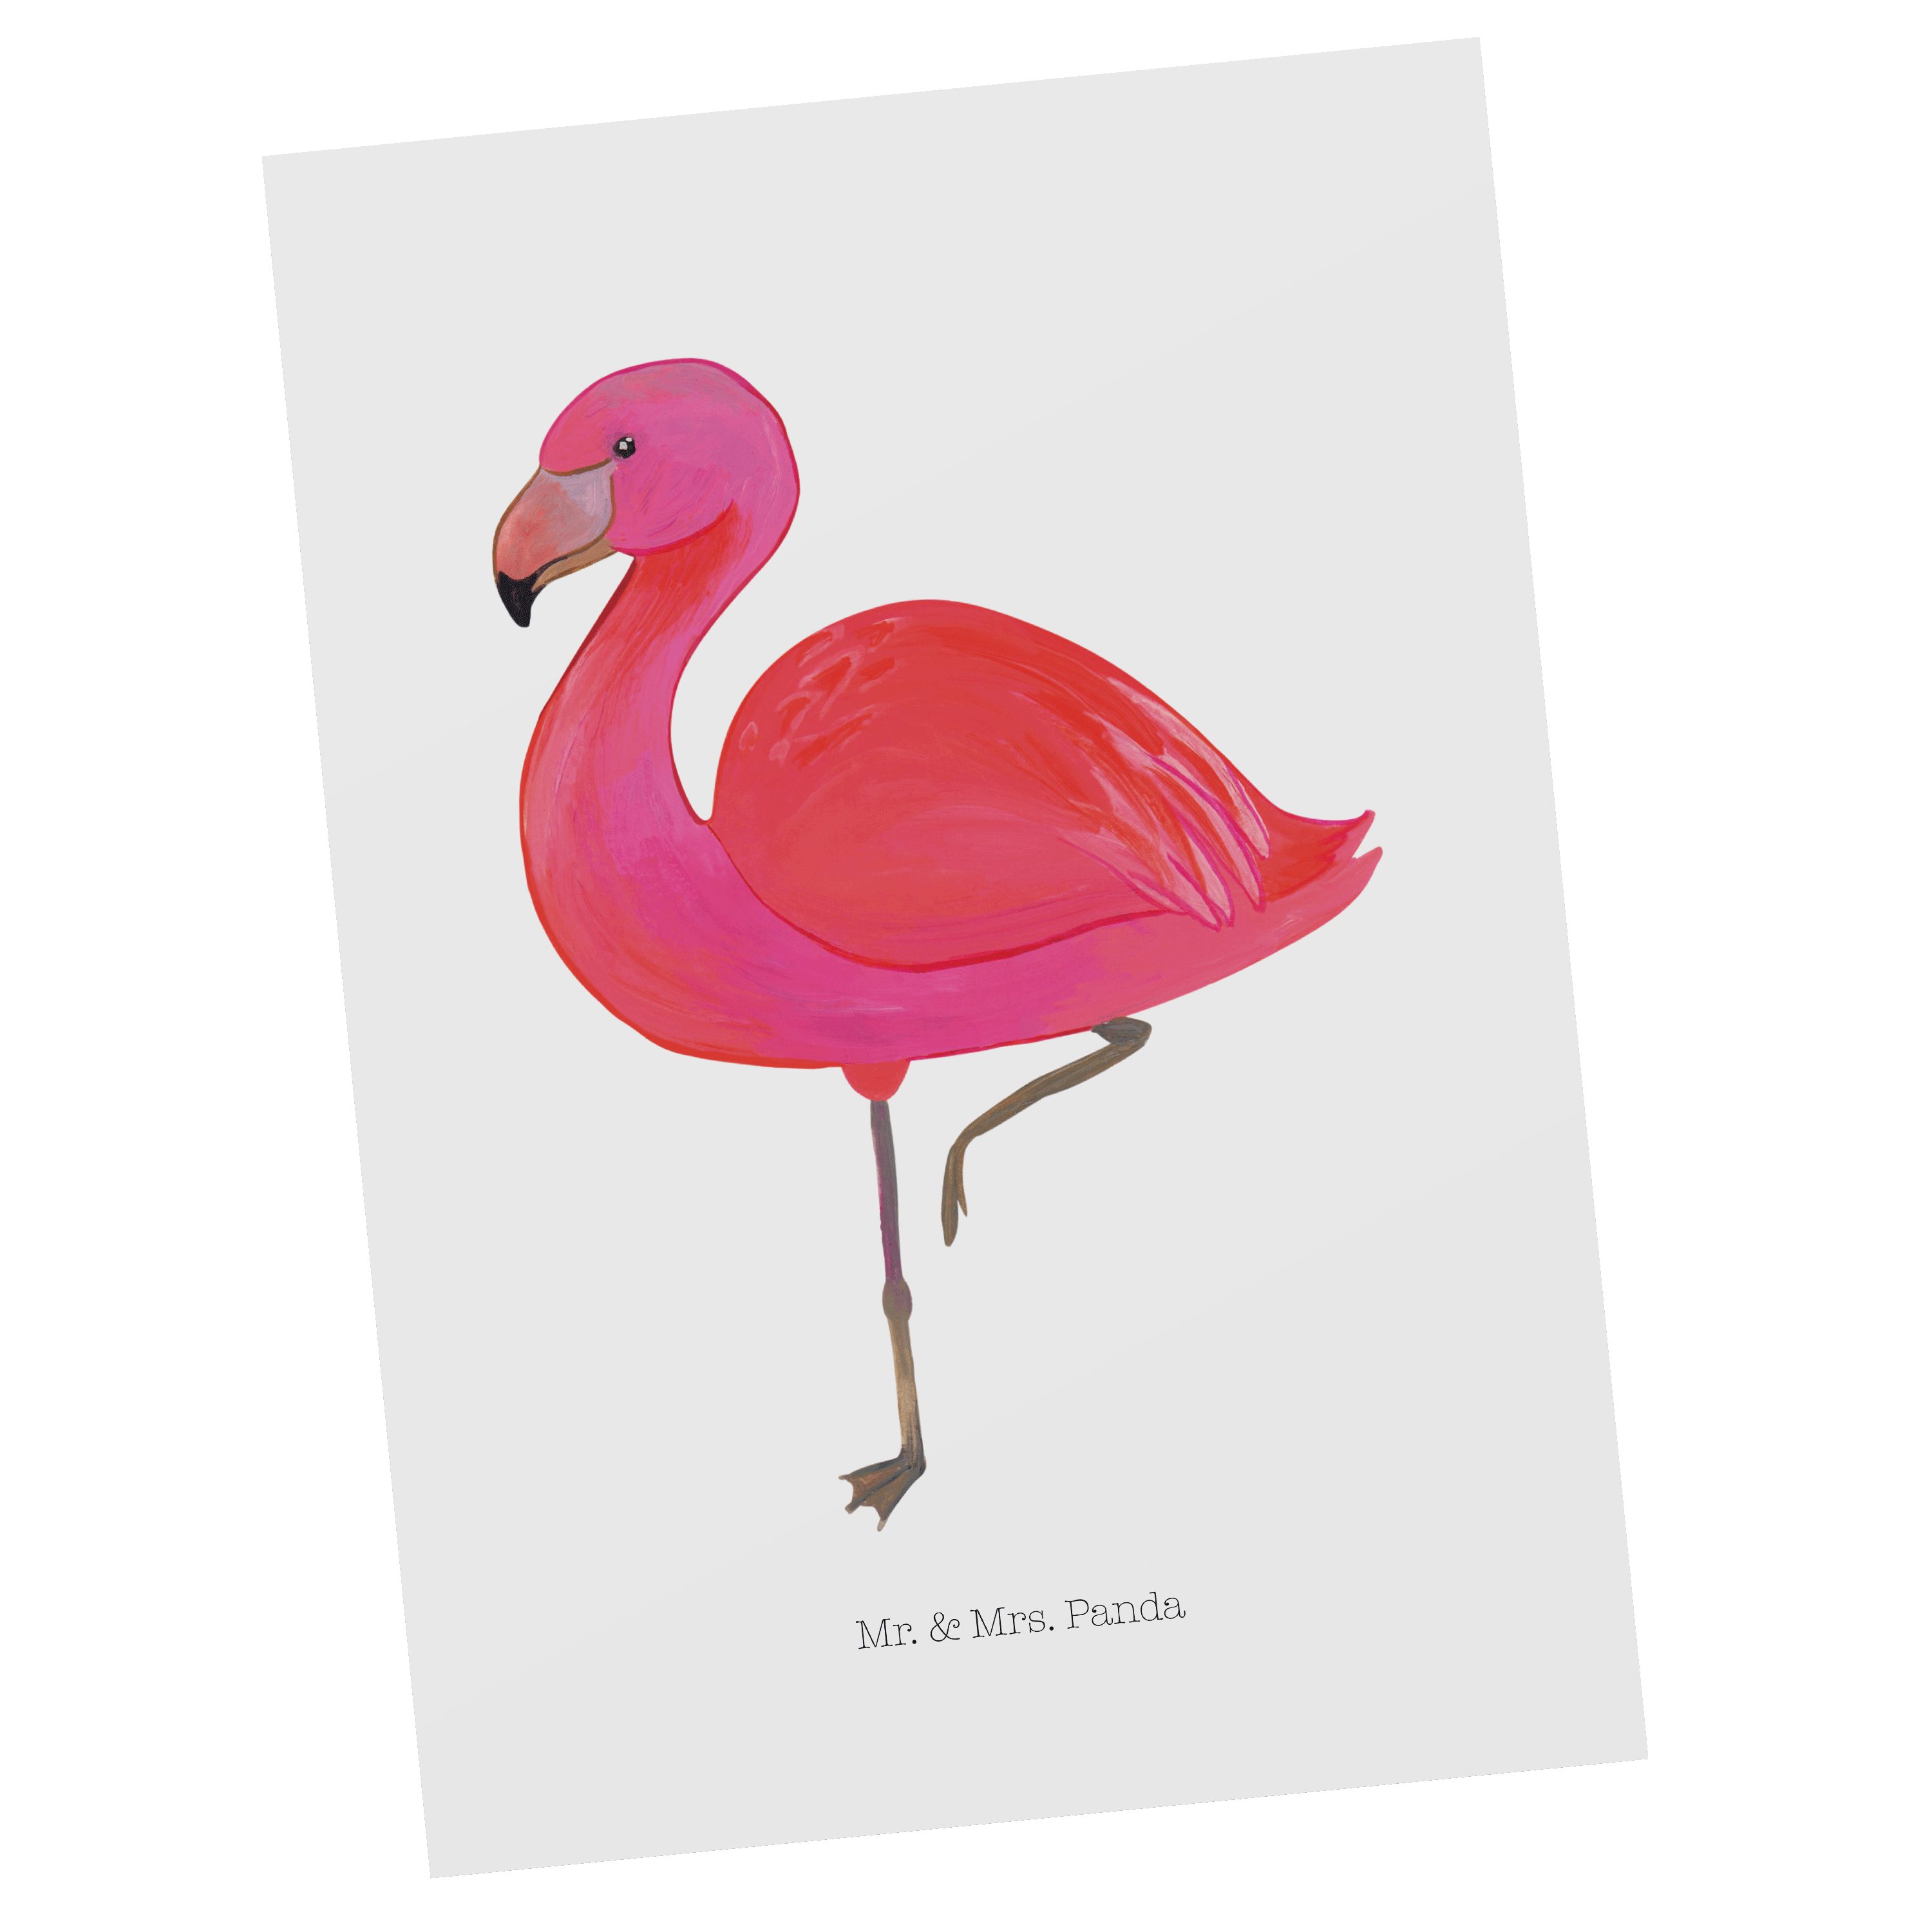 Mr. & Mrs. Panda Postkarte Flamingo classic - Weiß - Geschenk, Freundinnen, Einladung, Geschenkk